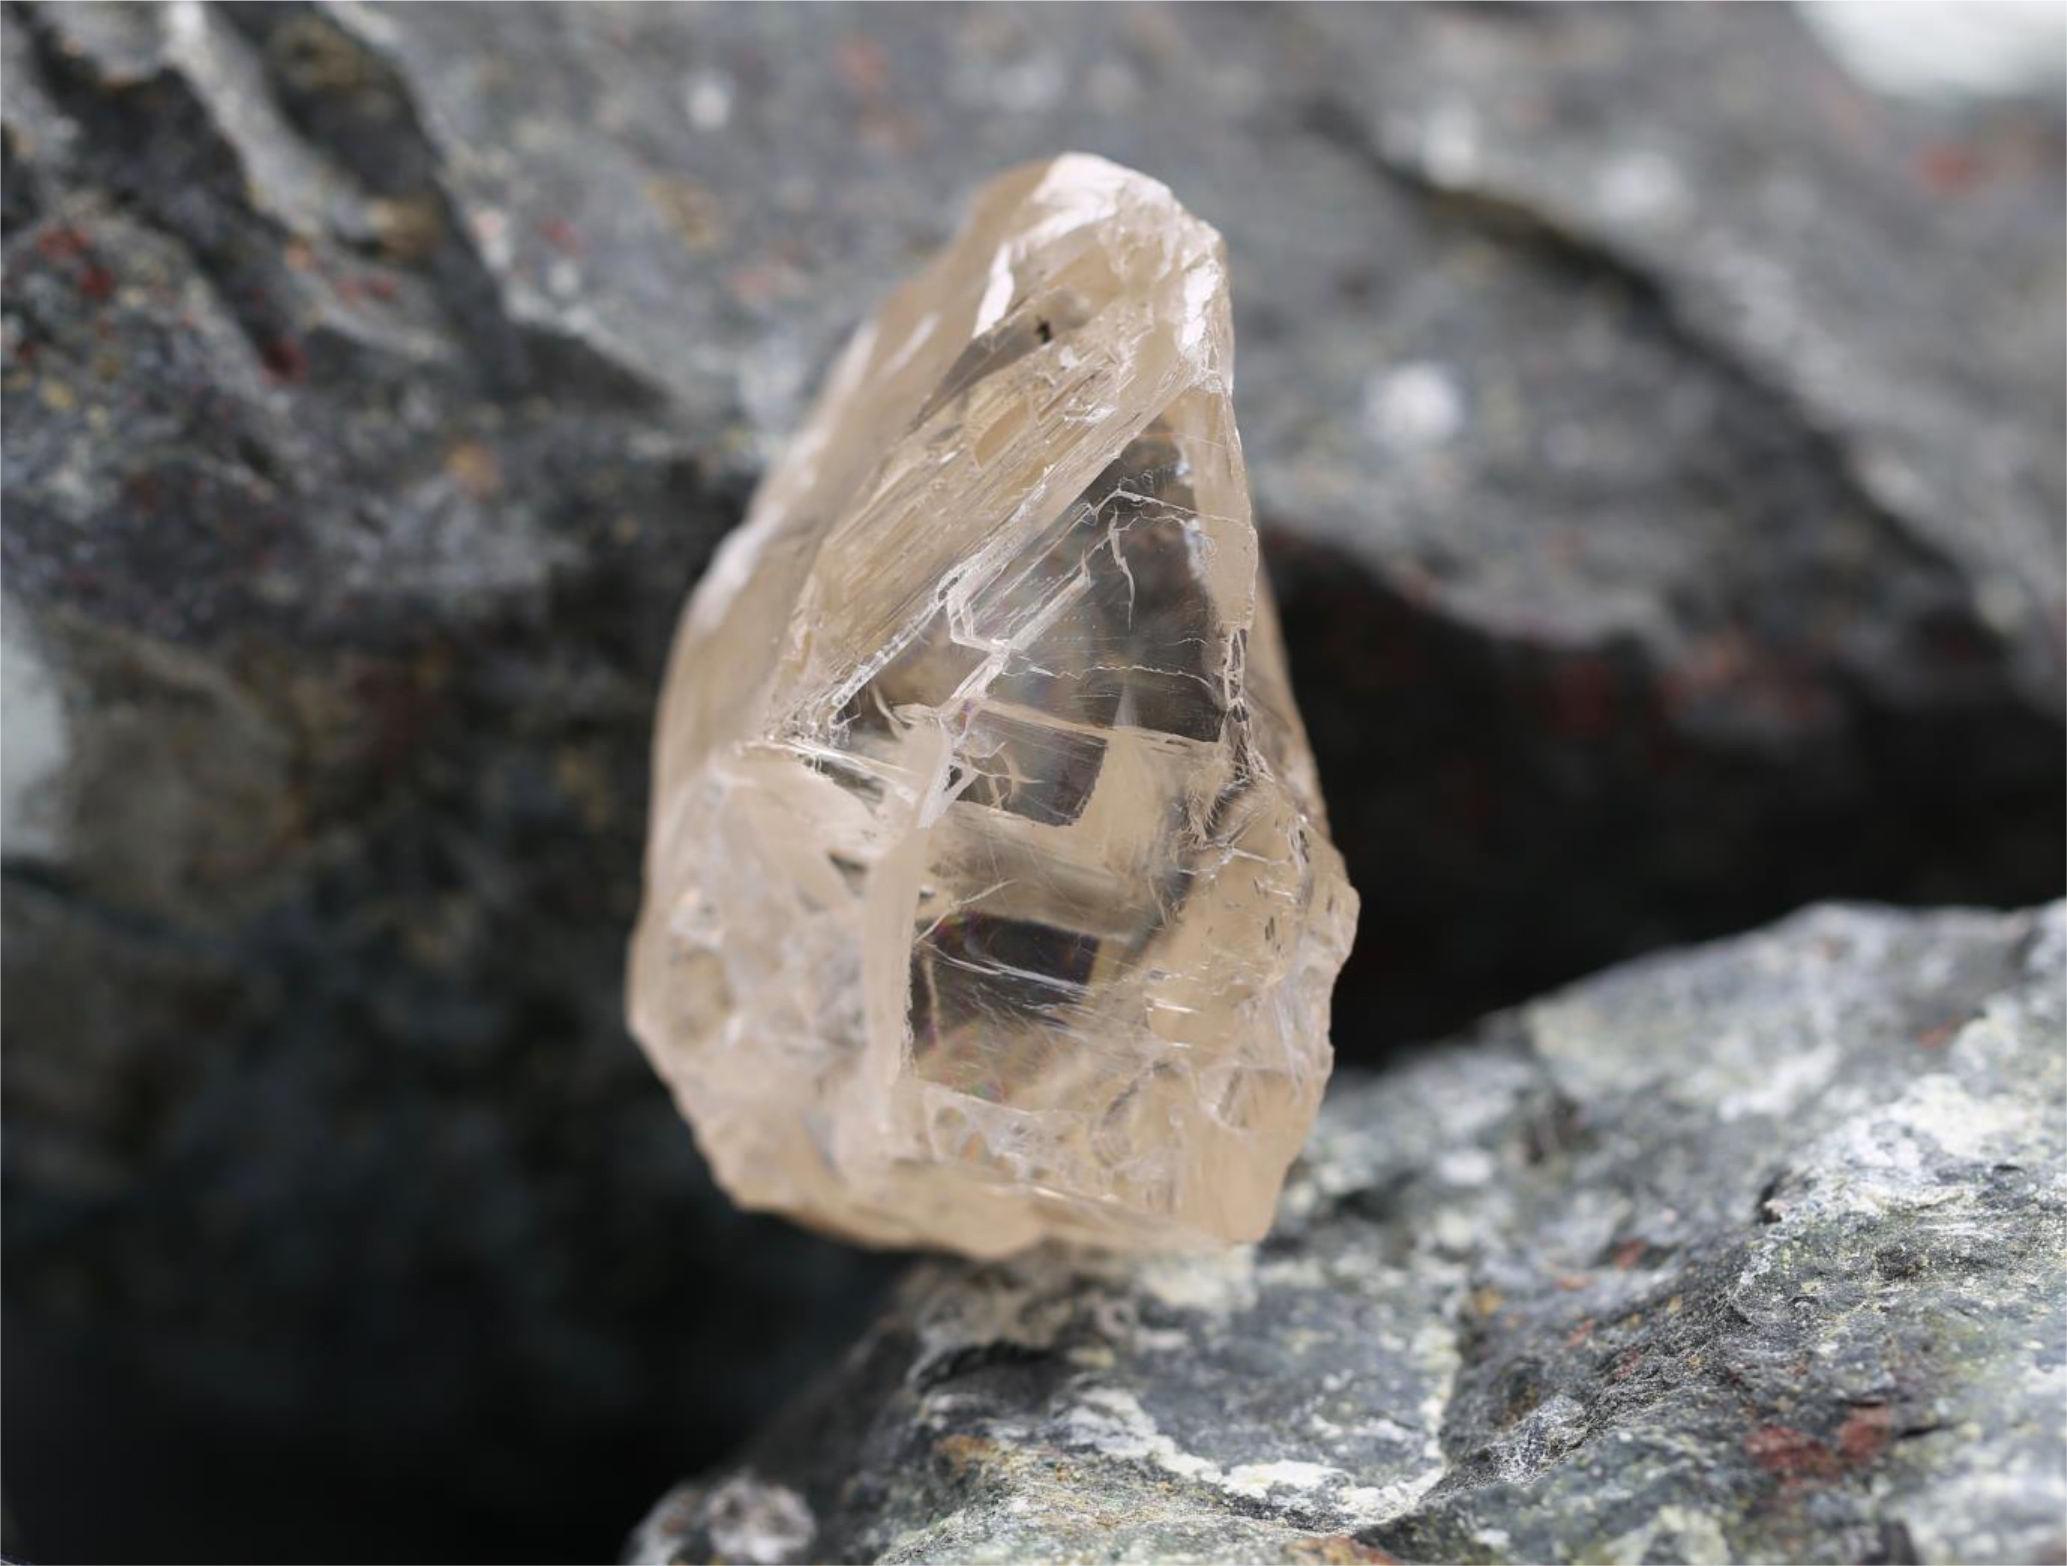 The diamond recovered from the Karowe Diamond Mine.